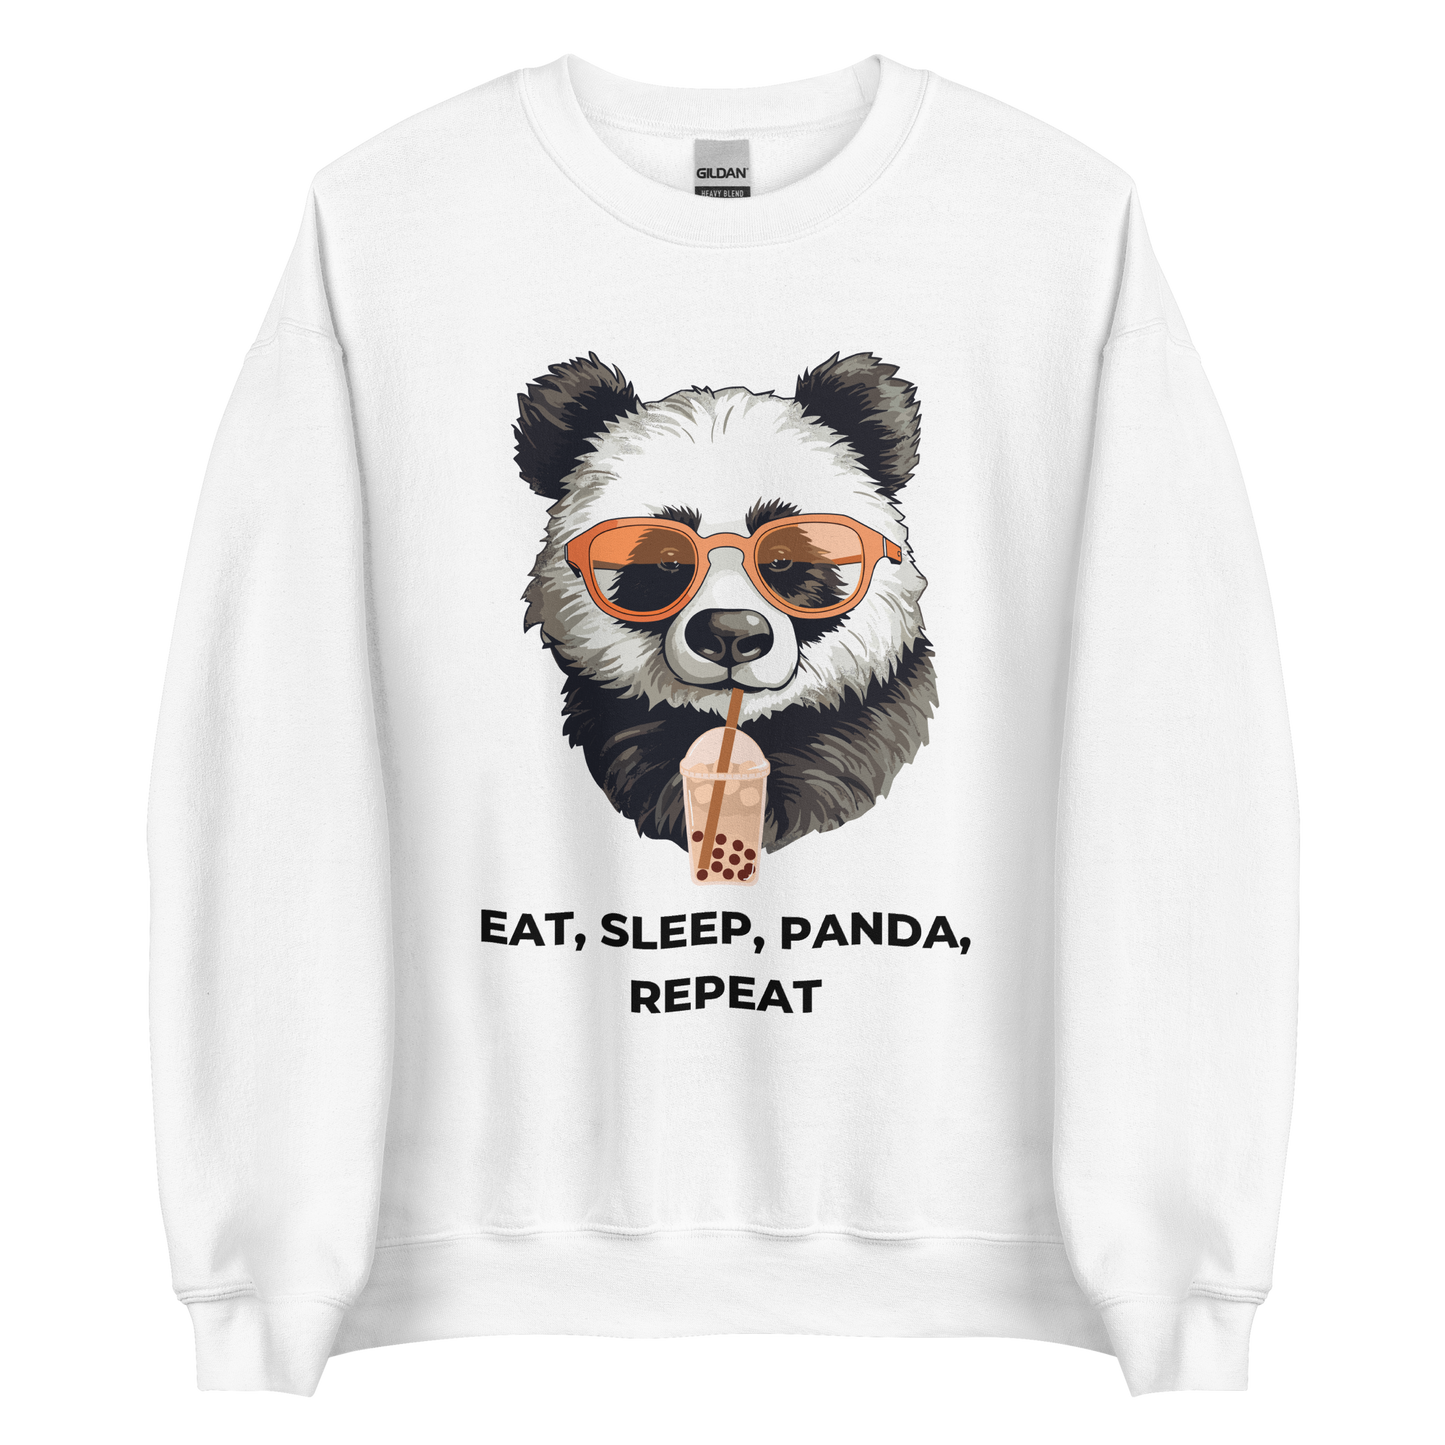 White Panda Sweatshirt featuring an adorable Eat, Sleep, Panda, Repeat graphic on the chest - Funny Graphic Panda Sweatshirts - Boozy Fox